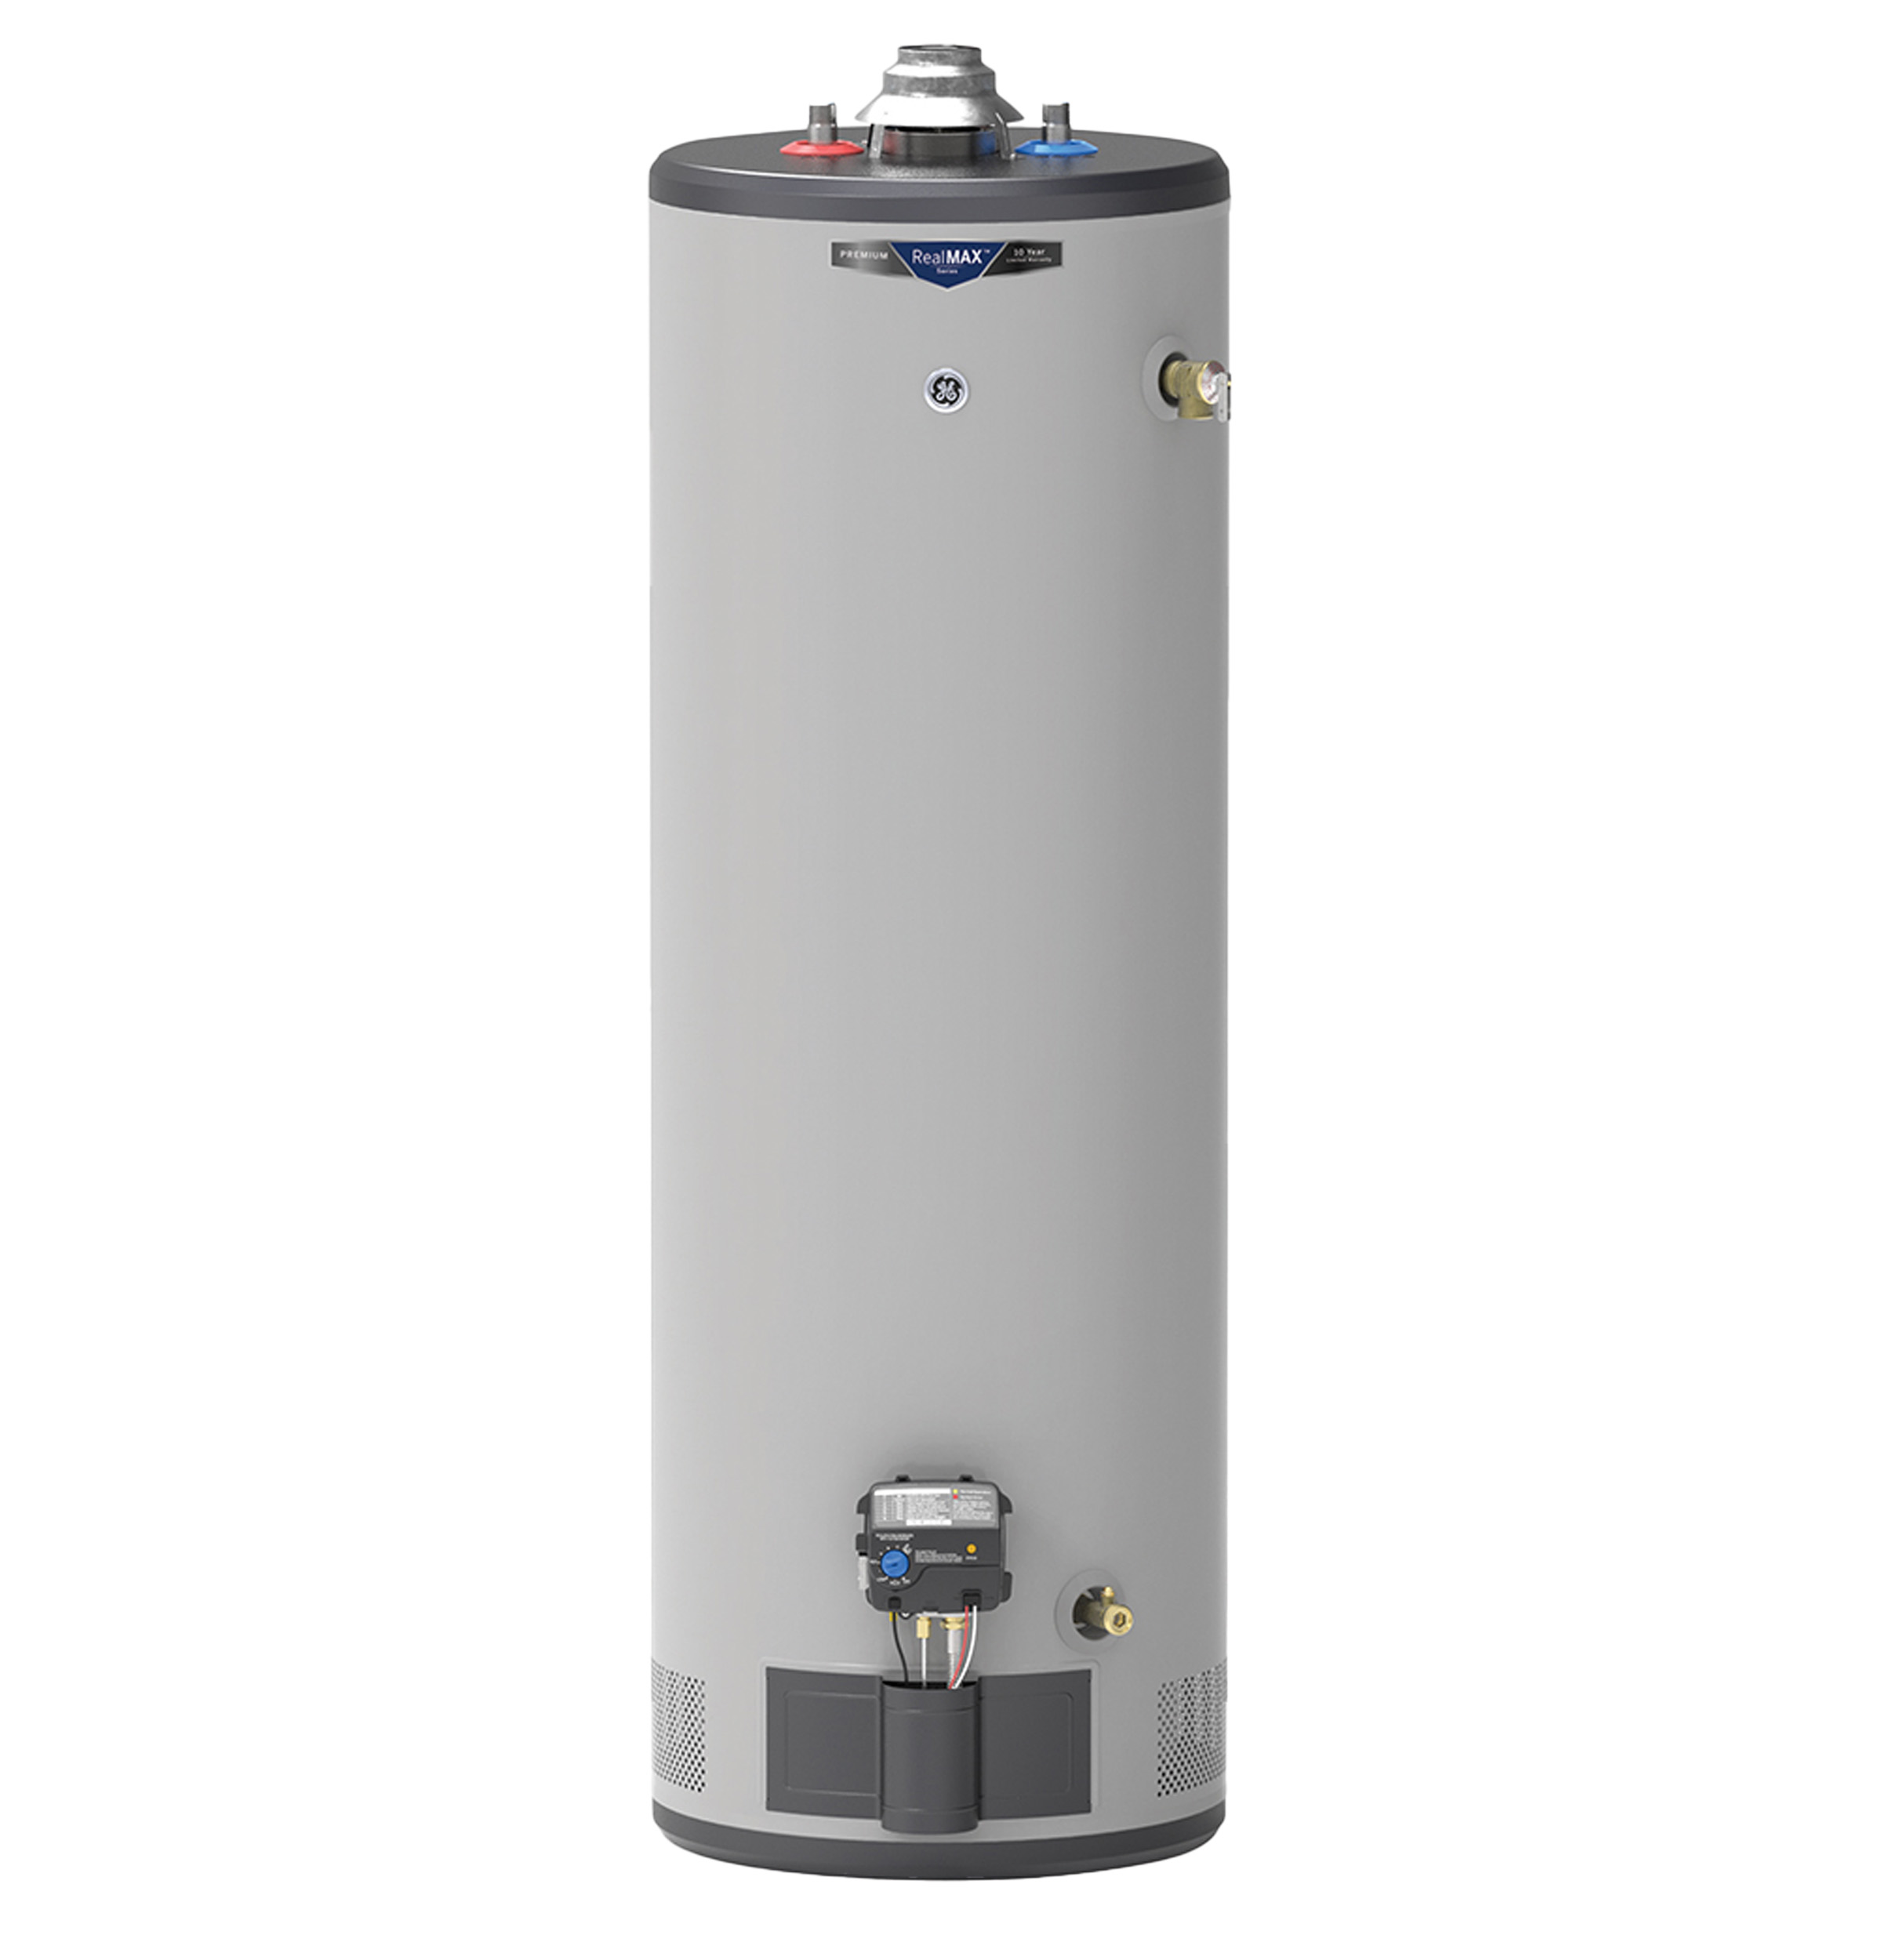 GE RealMAX Premium 40-Gallon Tall Liquid Propane Atmospheric Water Heater